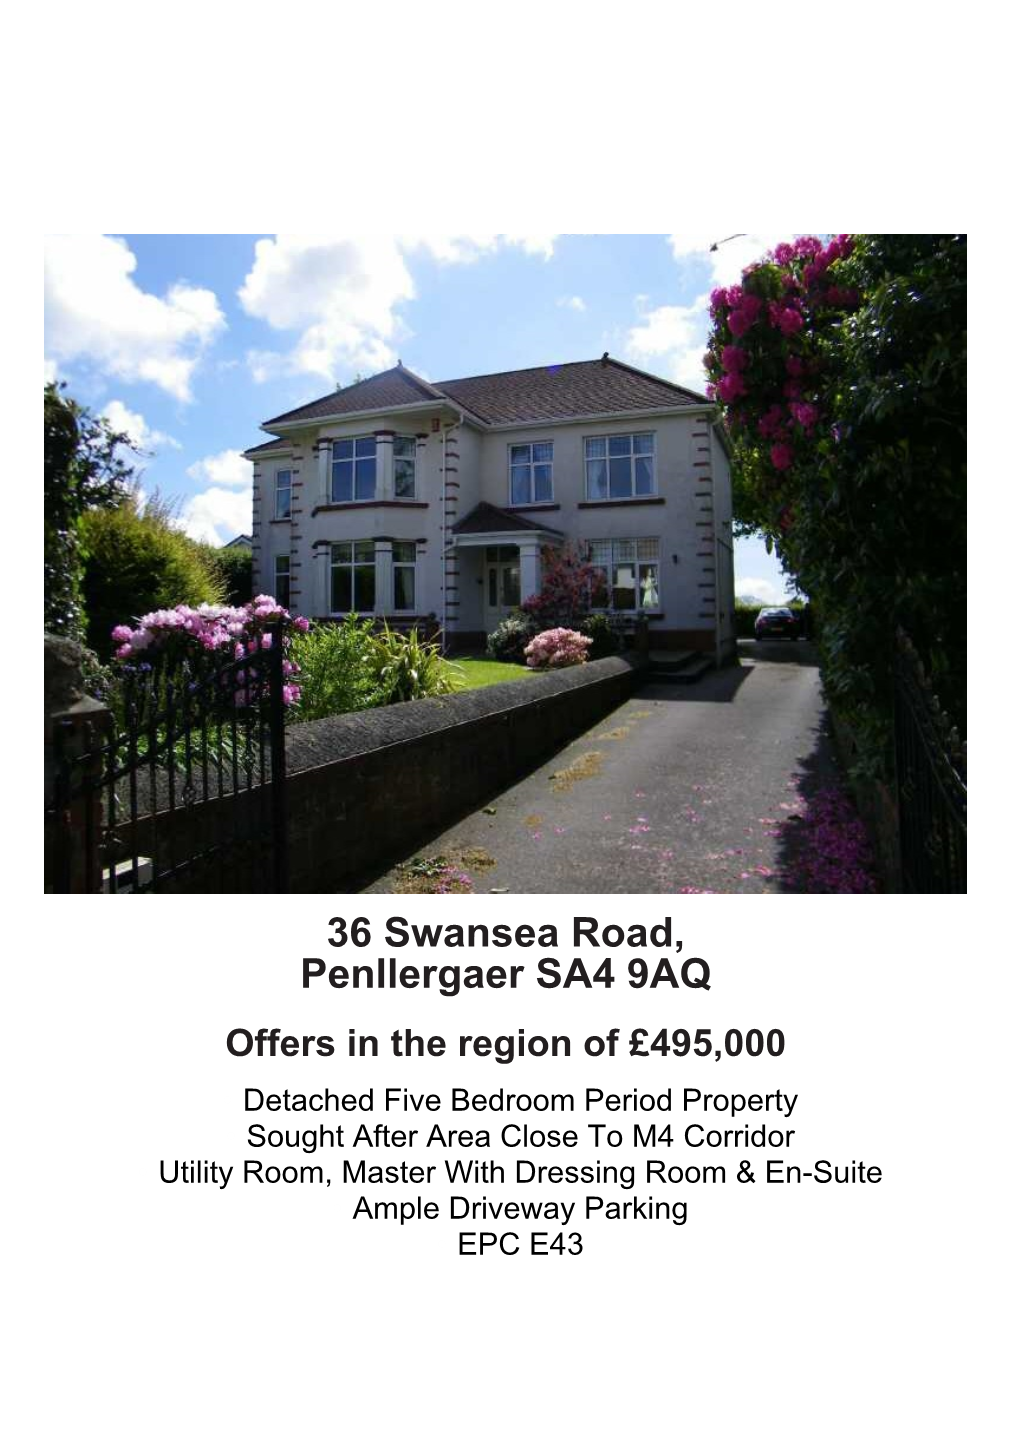 36 Swansea Road, Penllergaer SA4